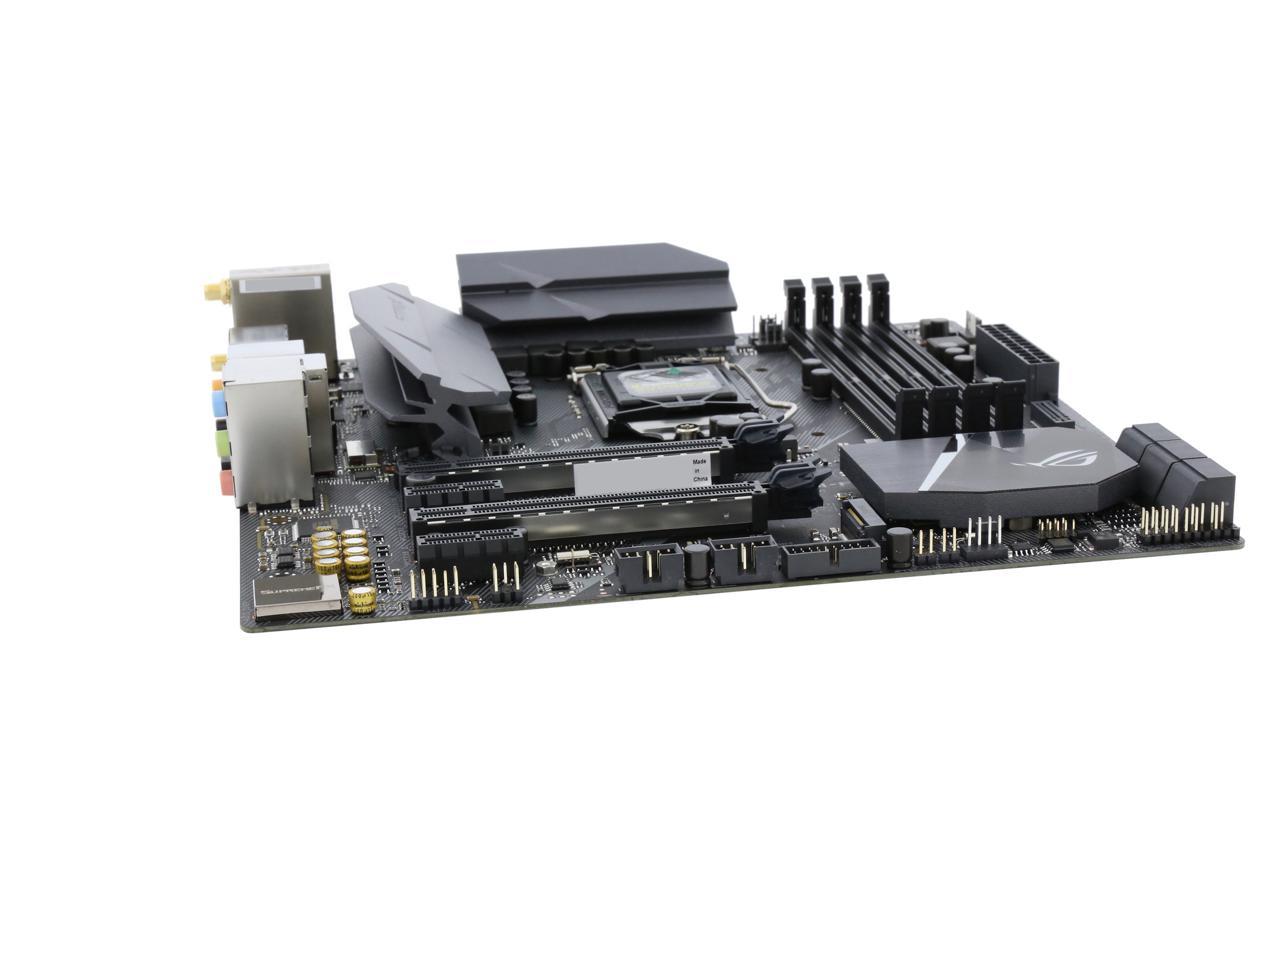 Asus Rog Strix Z370 G Gaming Wi Fi Ac Lga 1151 300 Series Micro Atx Intel Motherboard Newegg Com